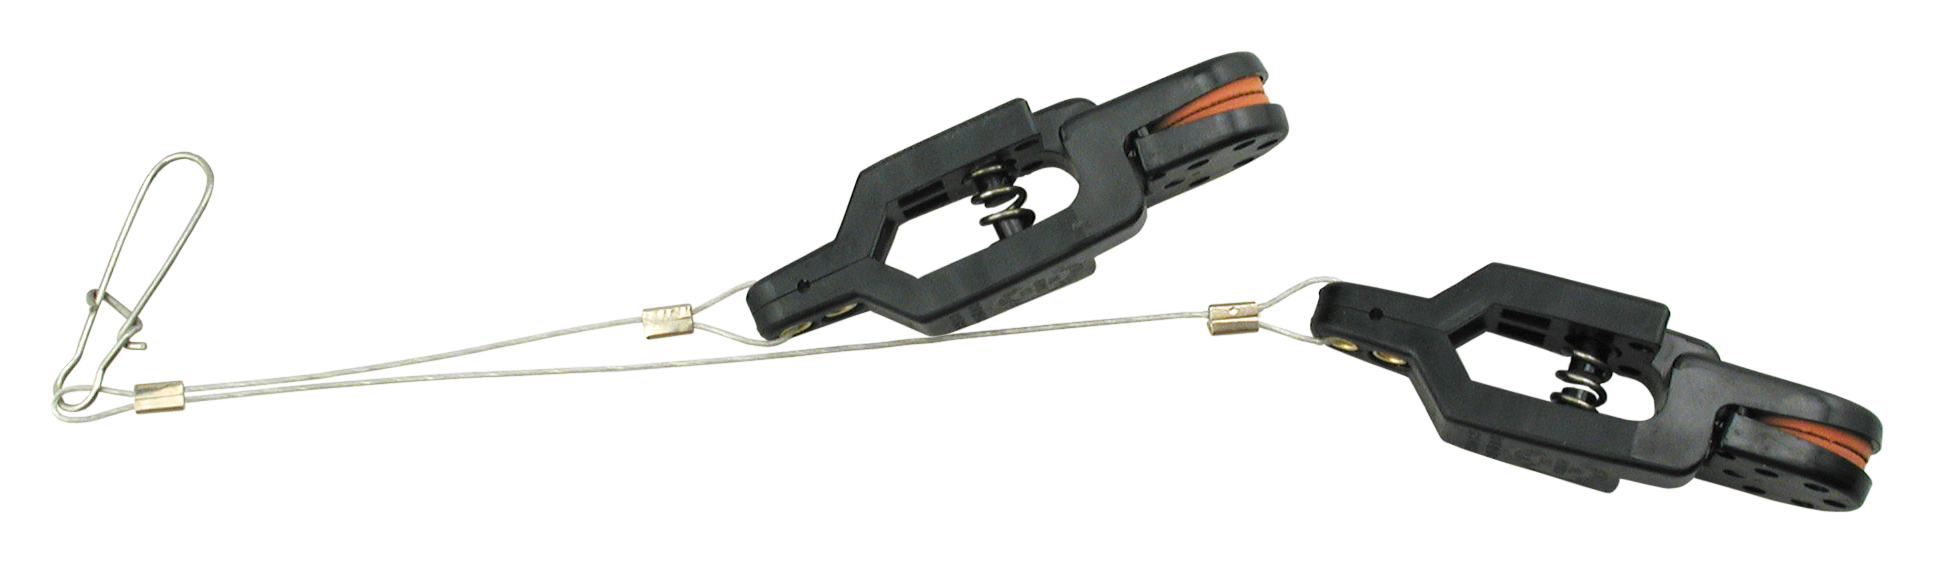 Downrigger Accessories & Gear - Go Salmon Fishing